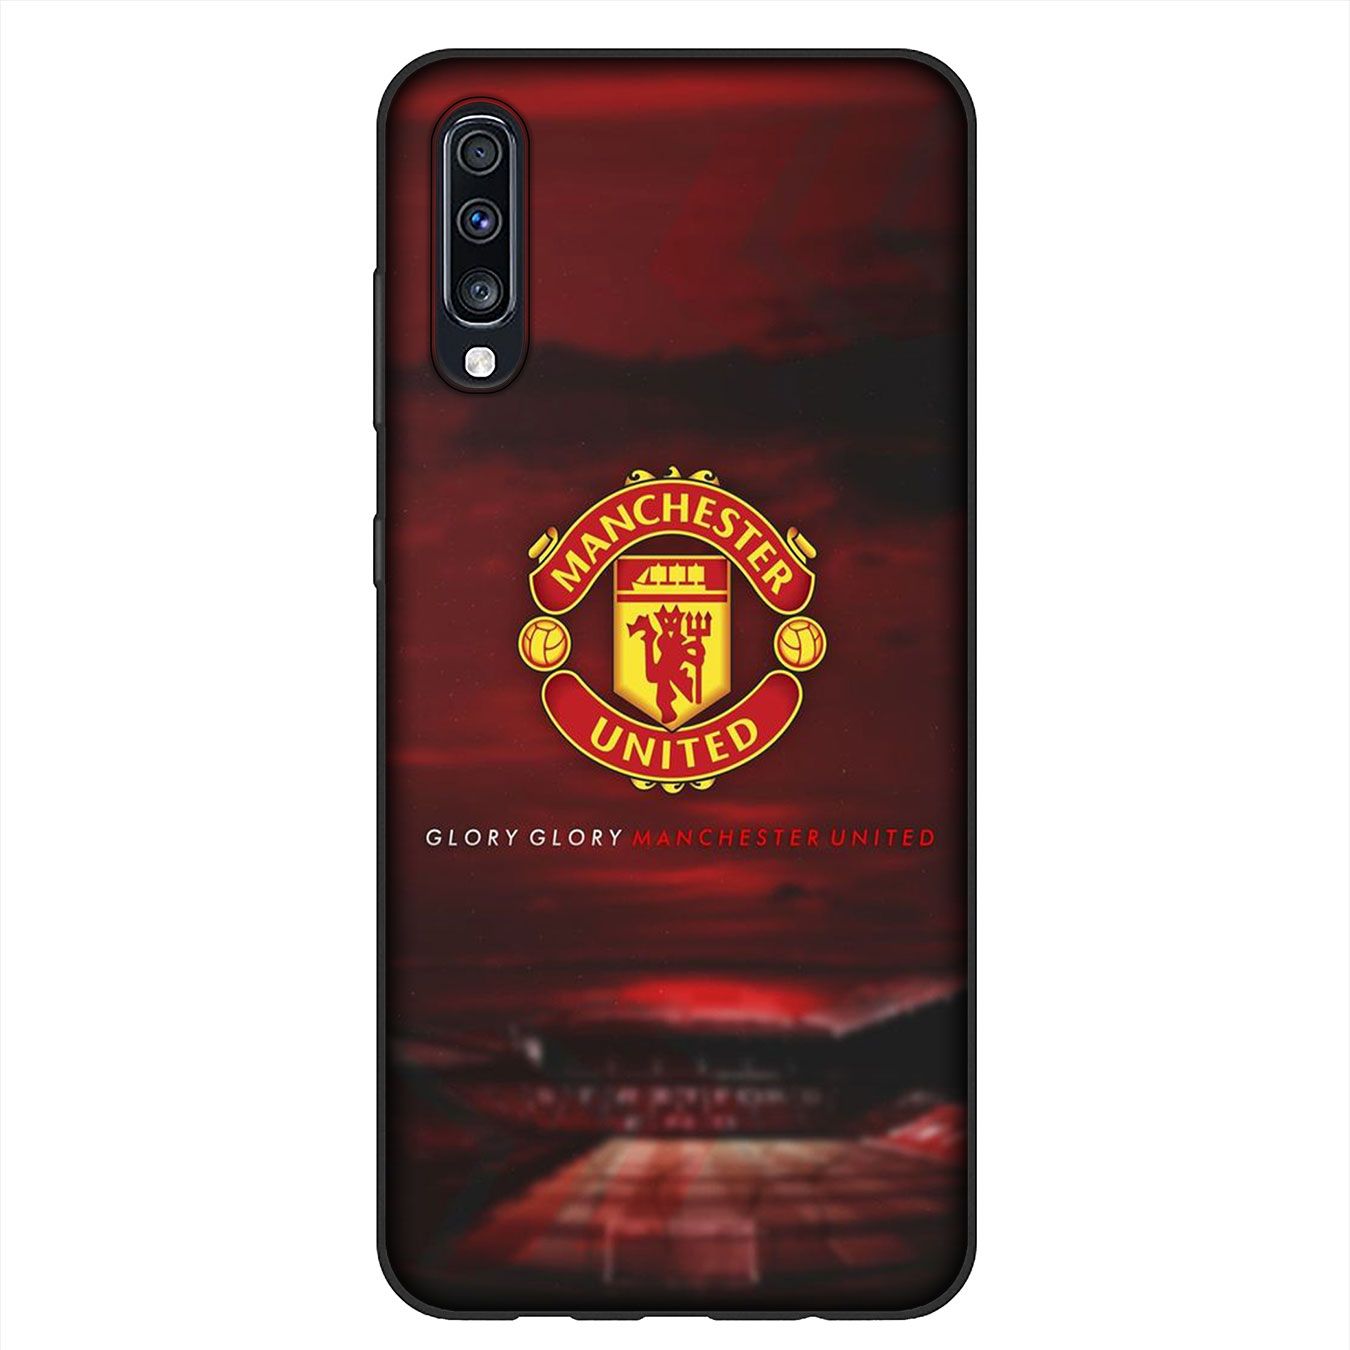 Ốp điện thoại silicon dẻo Manchester United cho Samsung Galaxy S21 Ultra S8 Plus M31 M51 A11 A31 A51 S21+ S8+ S21Plus